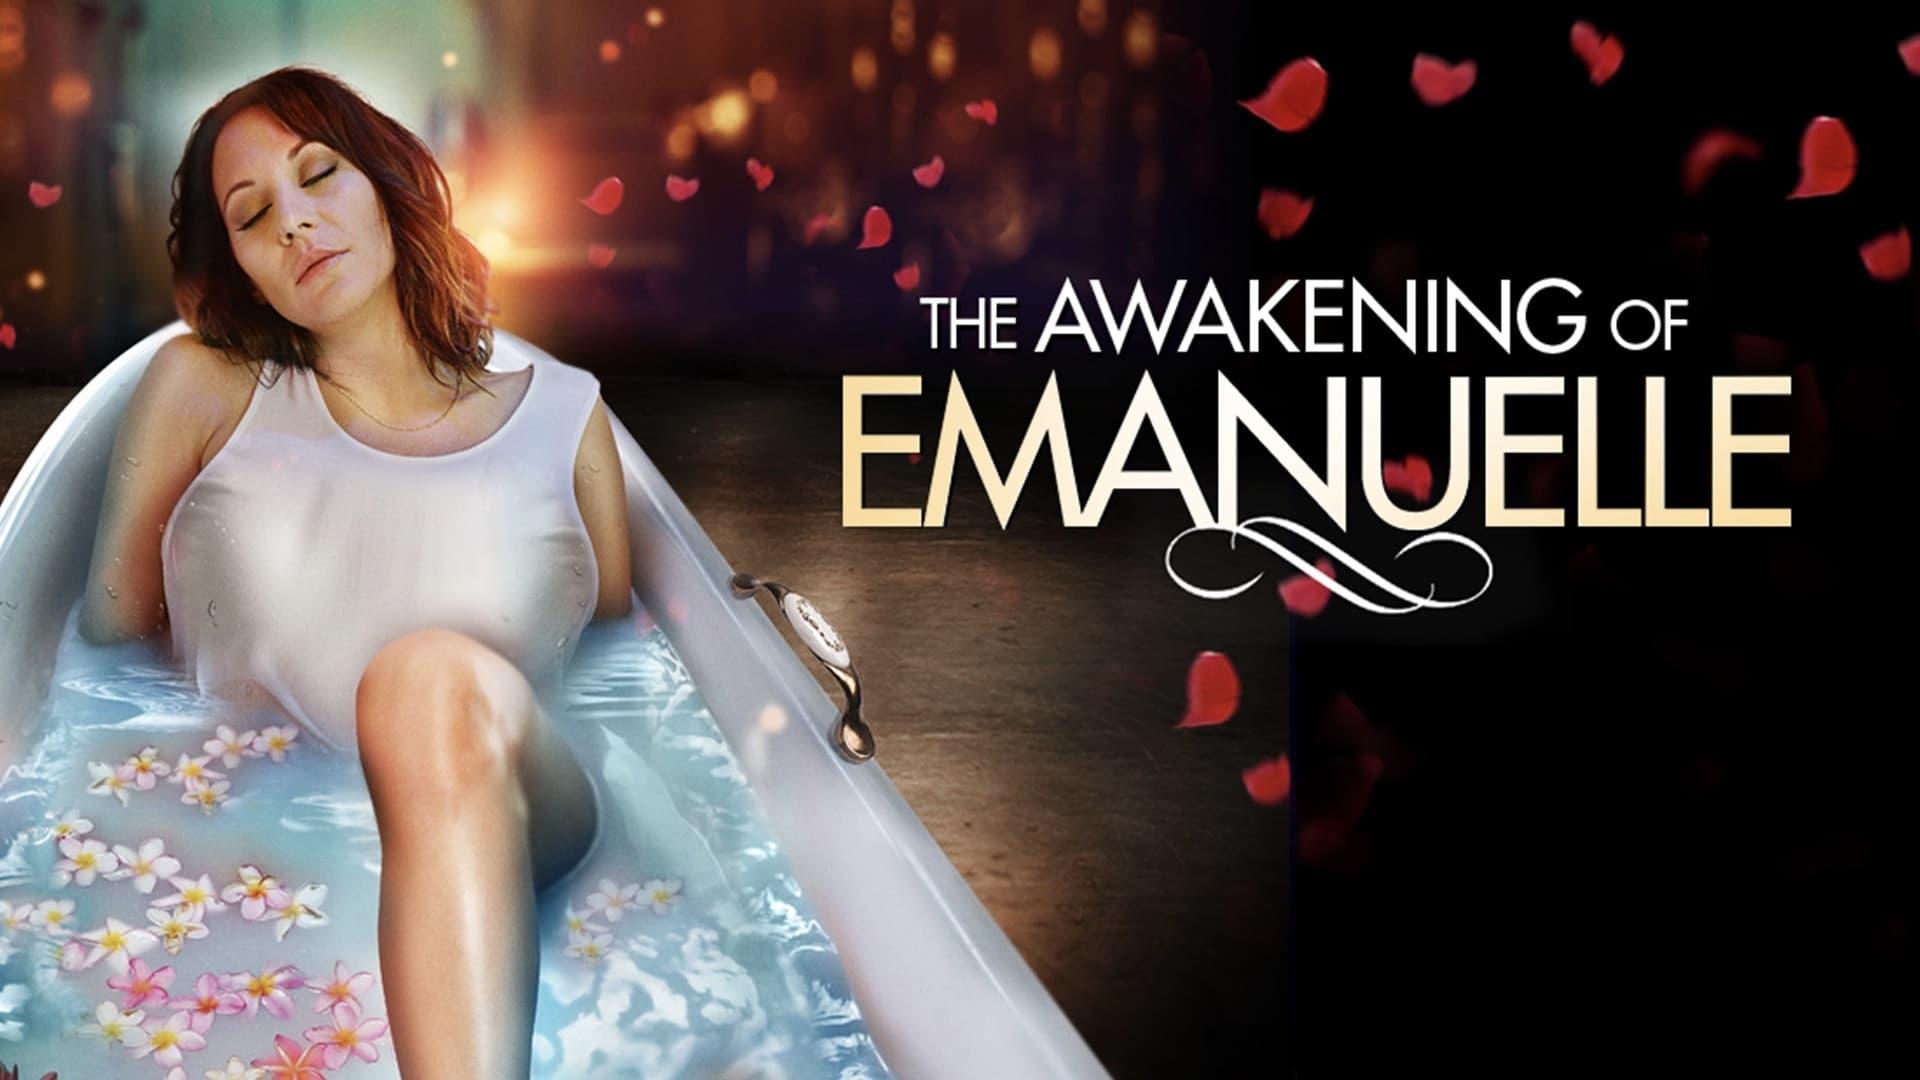 The Awakening of Emanuelle backdrop